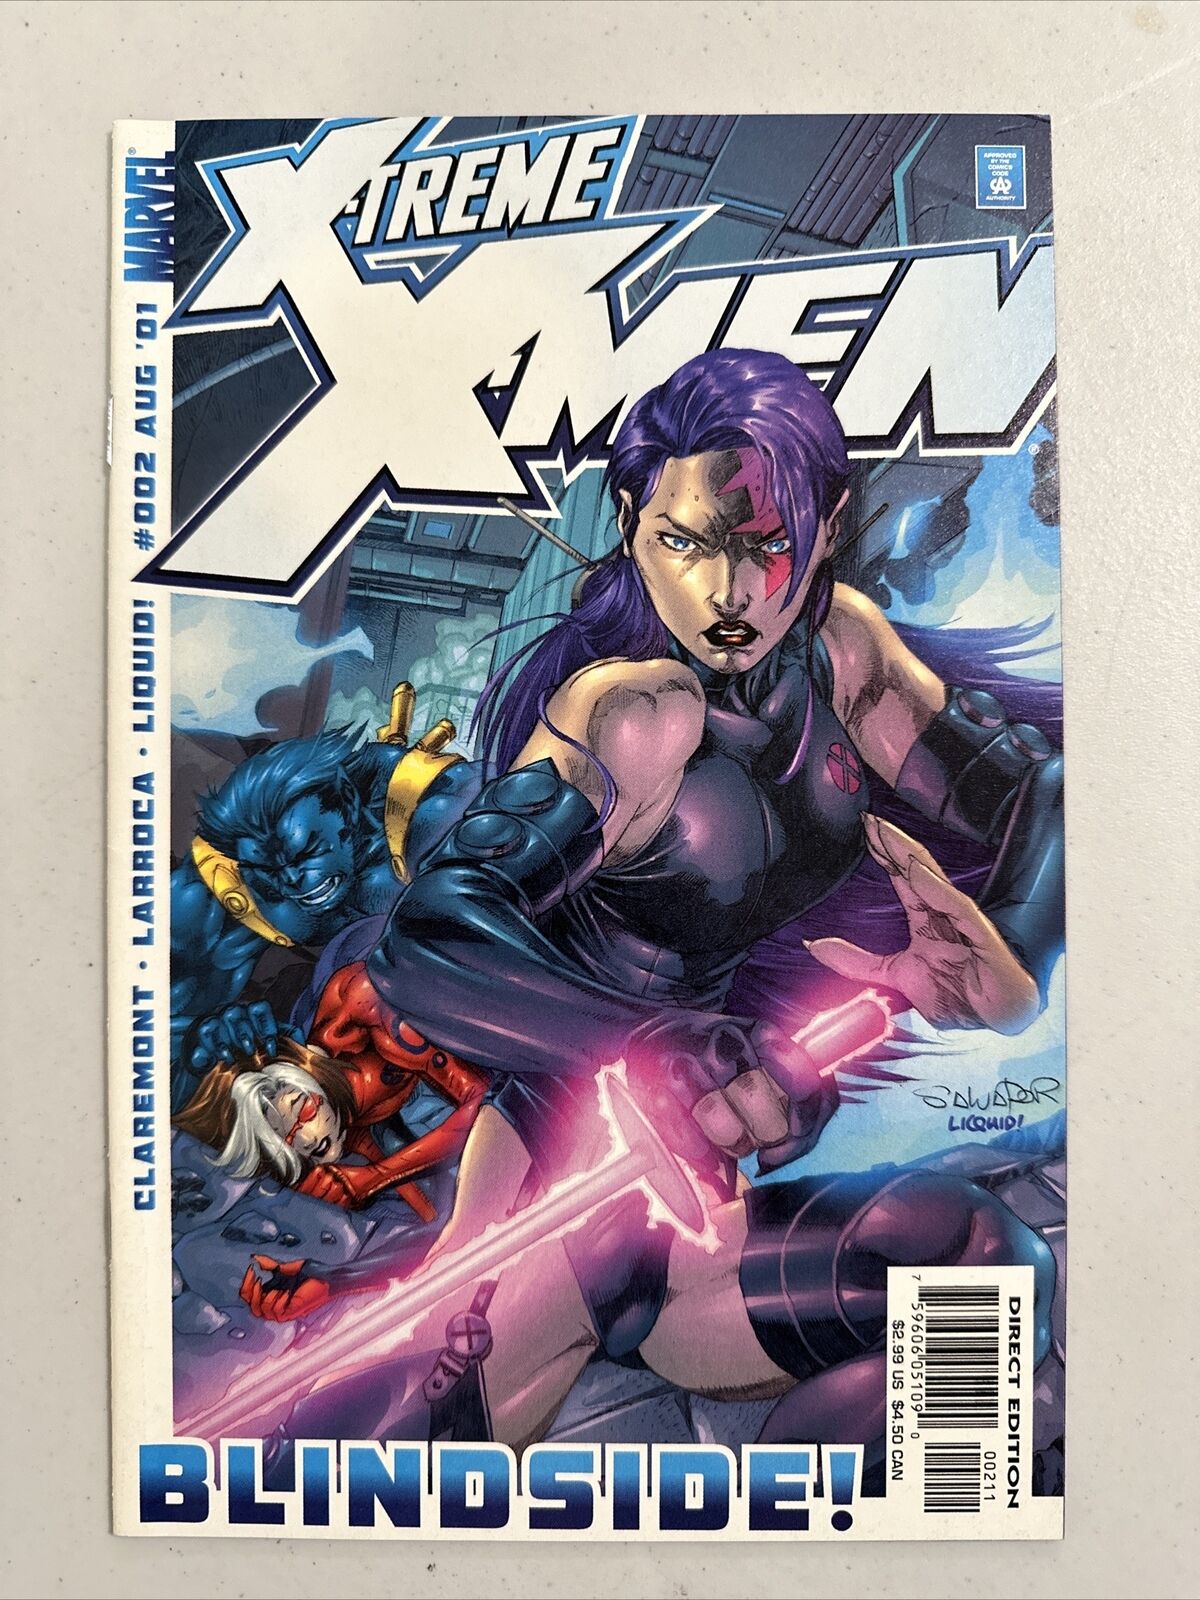 X-Treme X-Men #2 Marvel Comics HIGH GRADE COMBINE S&H